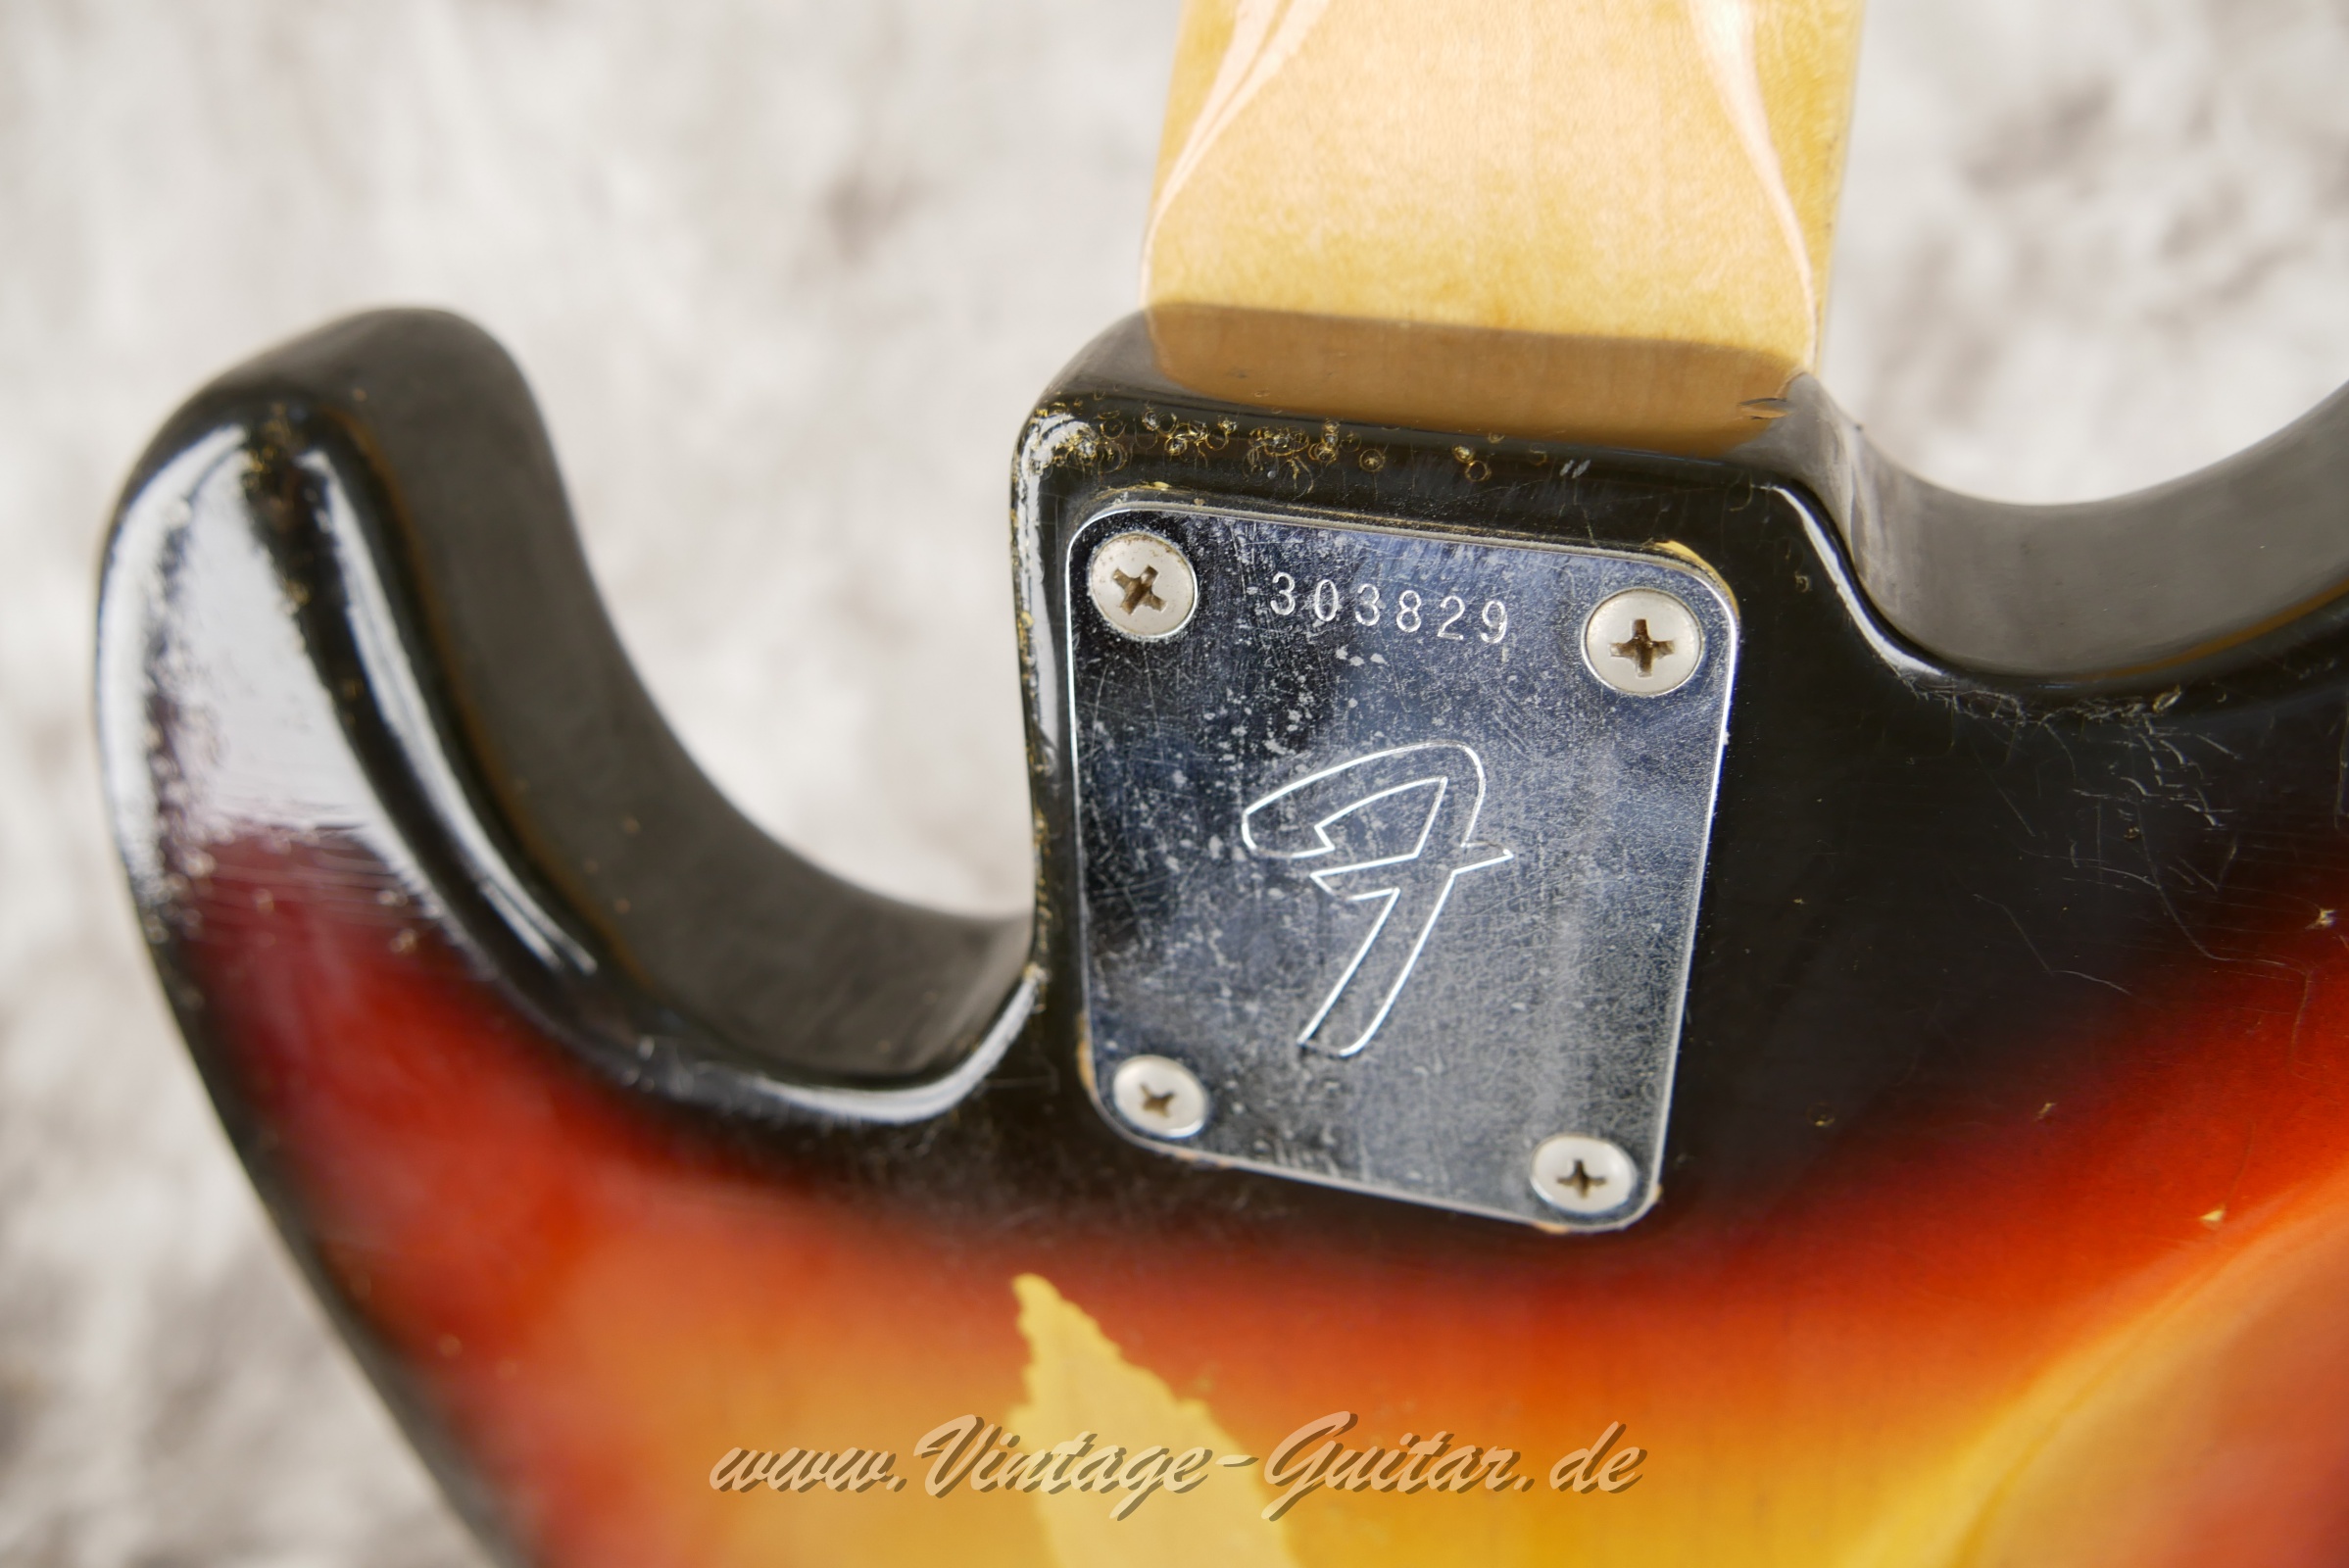 Fender-Jazz-Bass-1972-sunburst-013.JPG